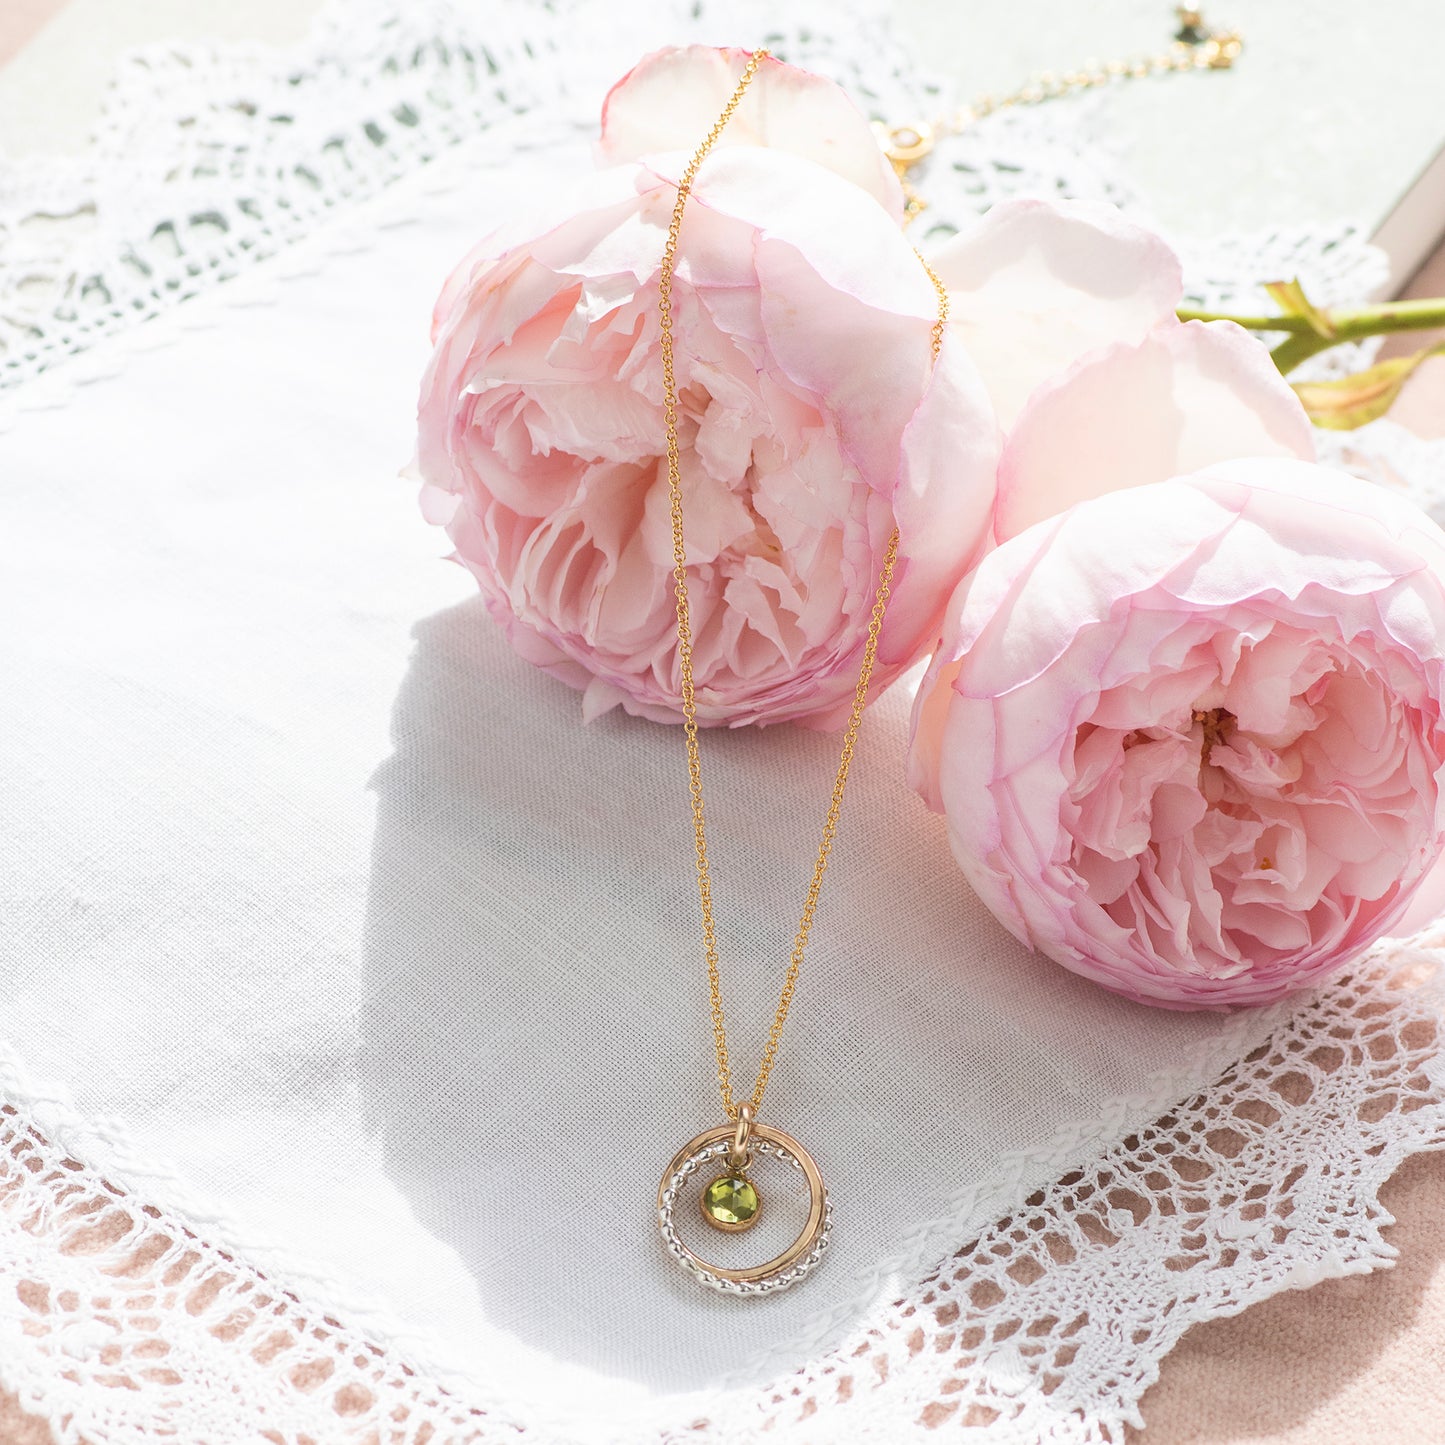 Jane Austen Inspired - Peridot Friendship Necklace - Silver & Gold